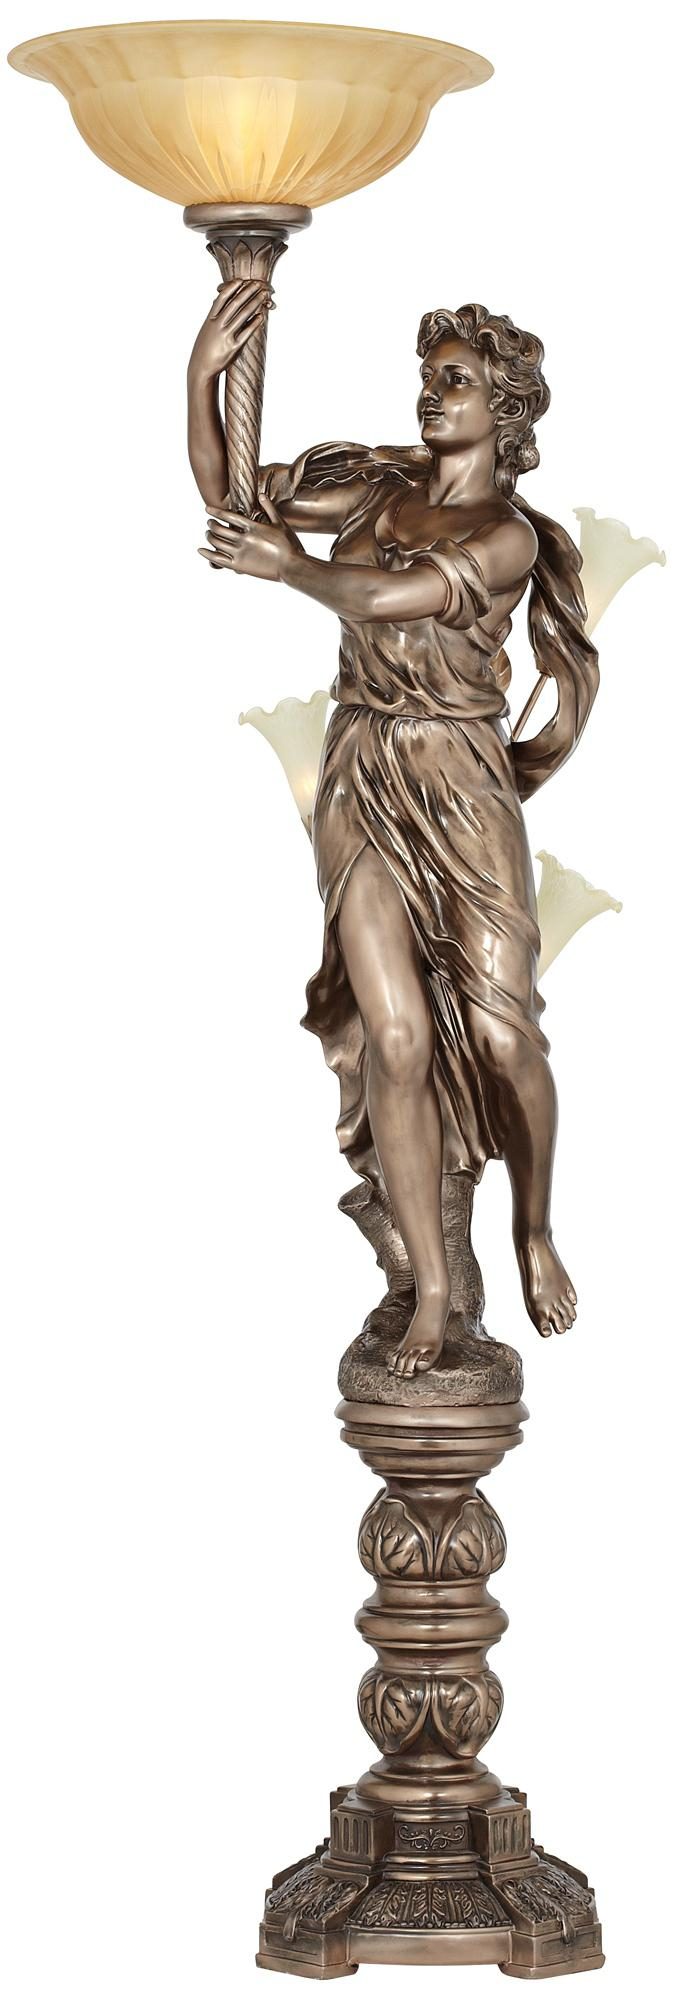 Bronze Maiden Statue Torchiere Floor Lamp Torchiere regarding size 673 X 2000